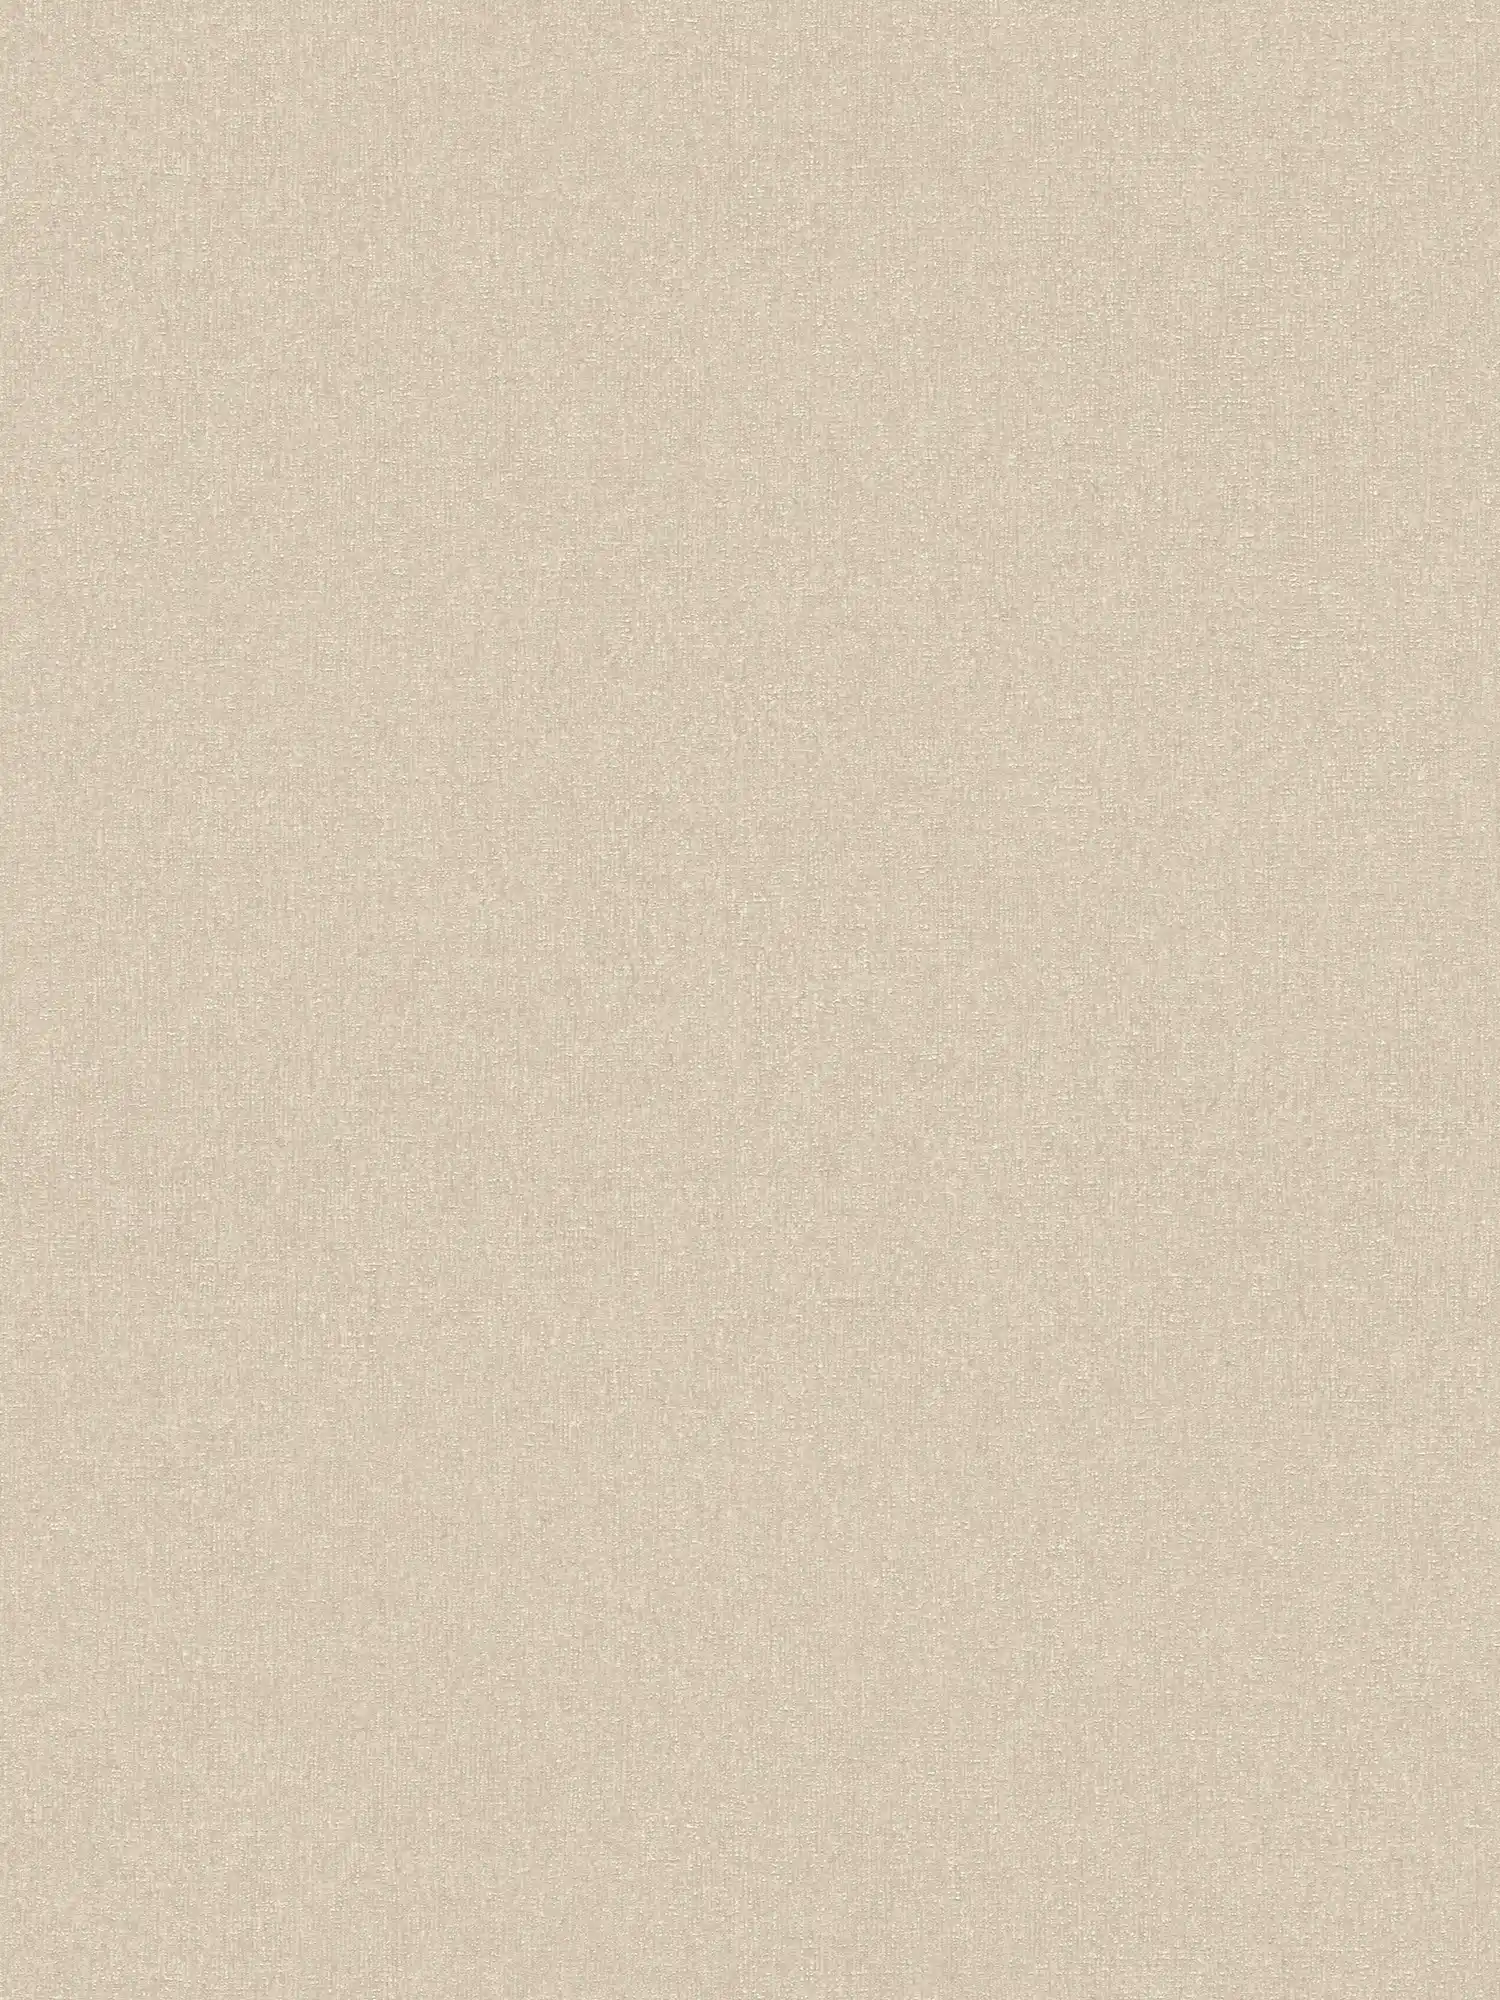 Non-woven wallpaper plains with fine structure - beige
